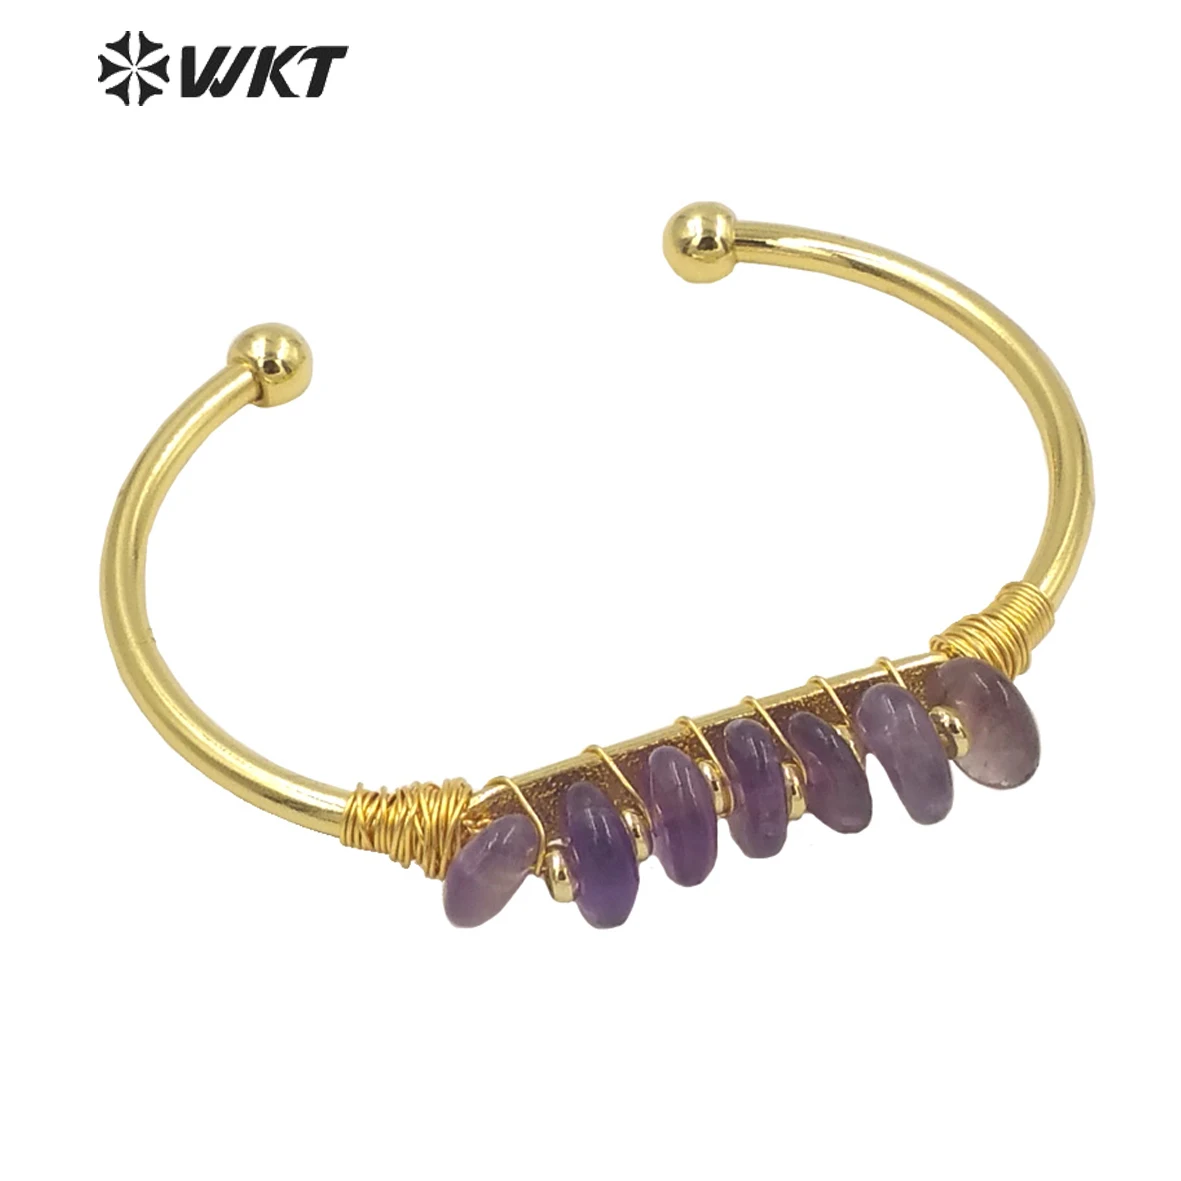 

WT-B580 Elegant tiny gold plated resist tarnishable stone bangle handmade wire wrapped irregular stone made cuff bangle